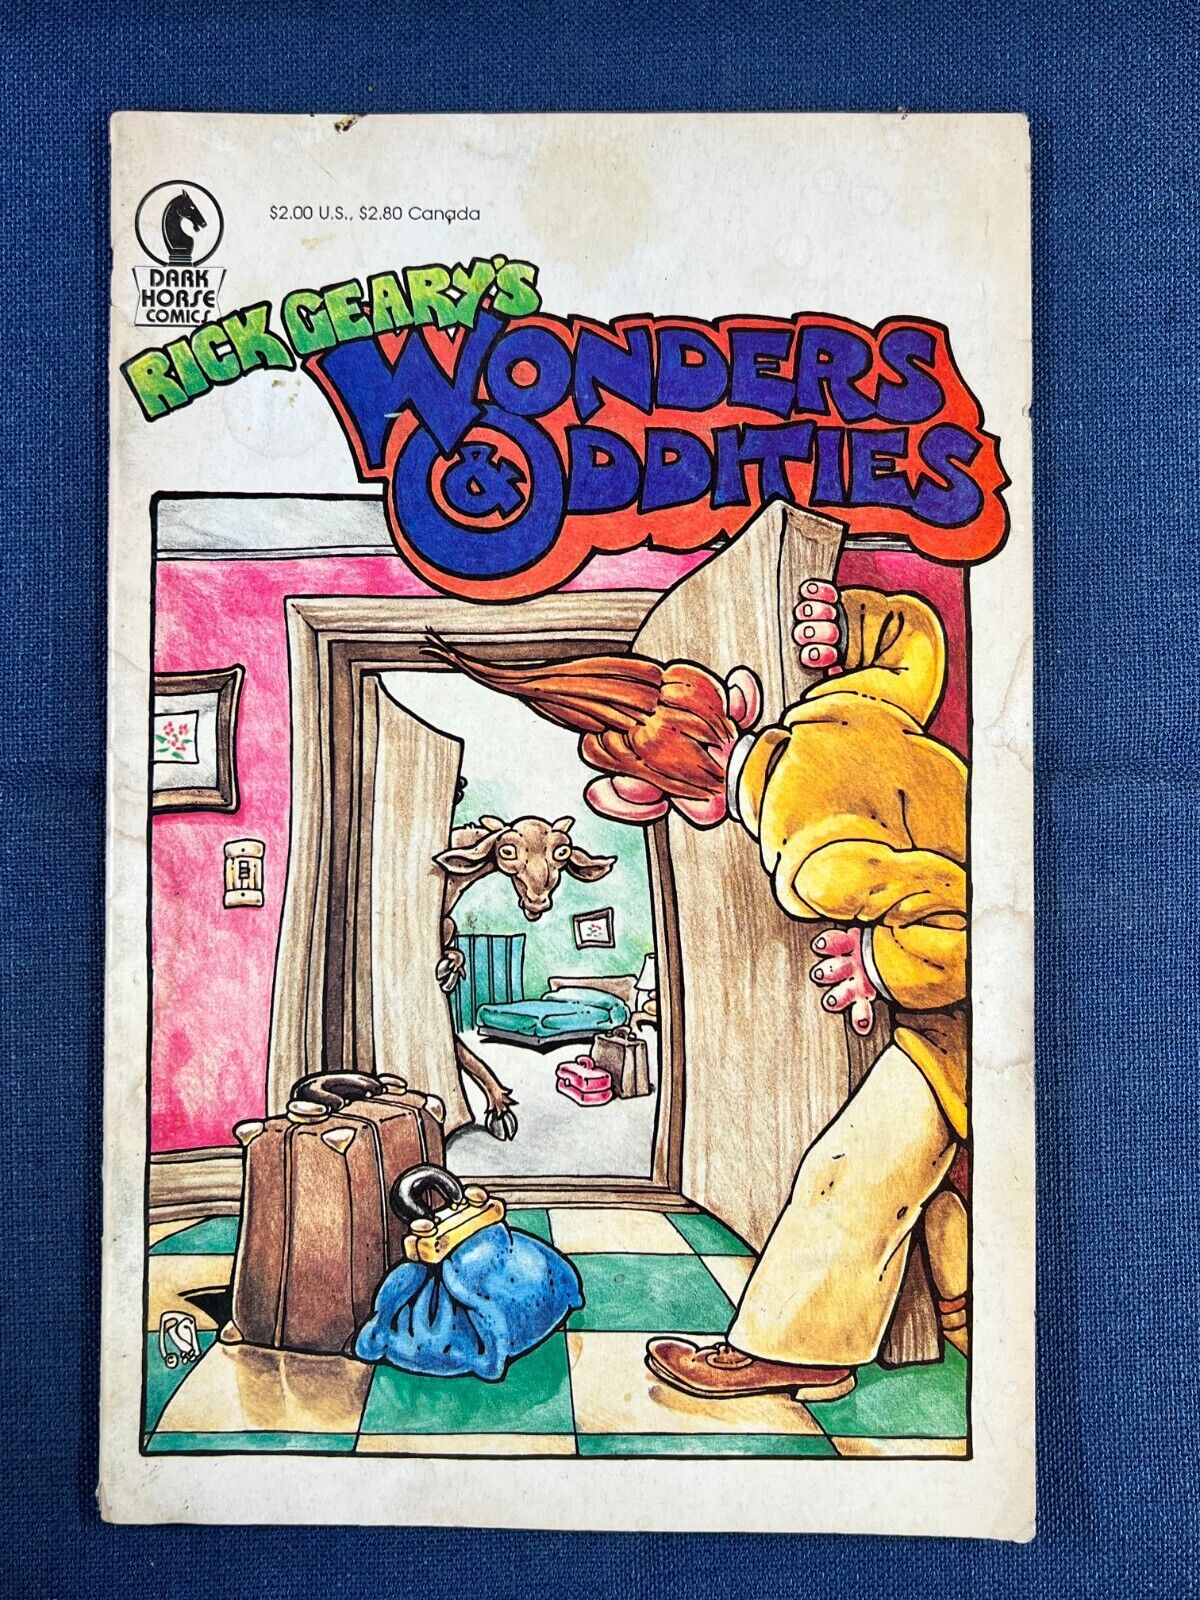 Rick Geary's Wonders and Oddities #1 - 1988